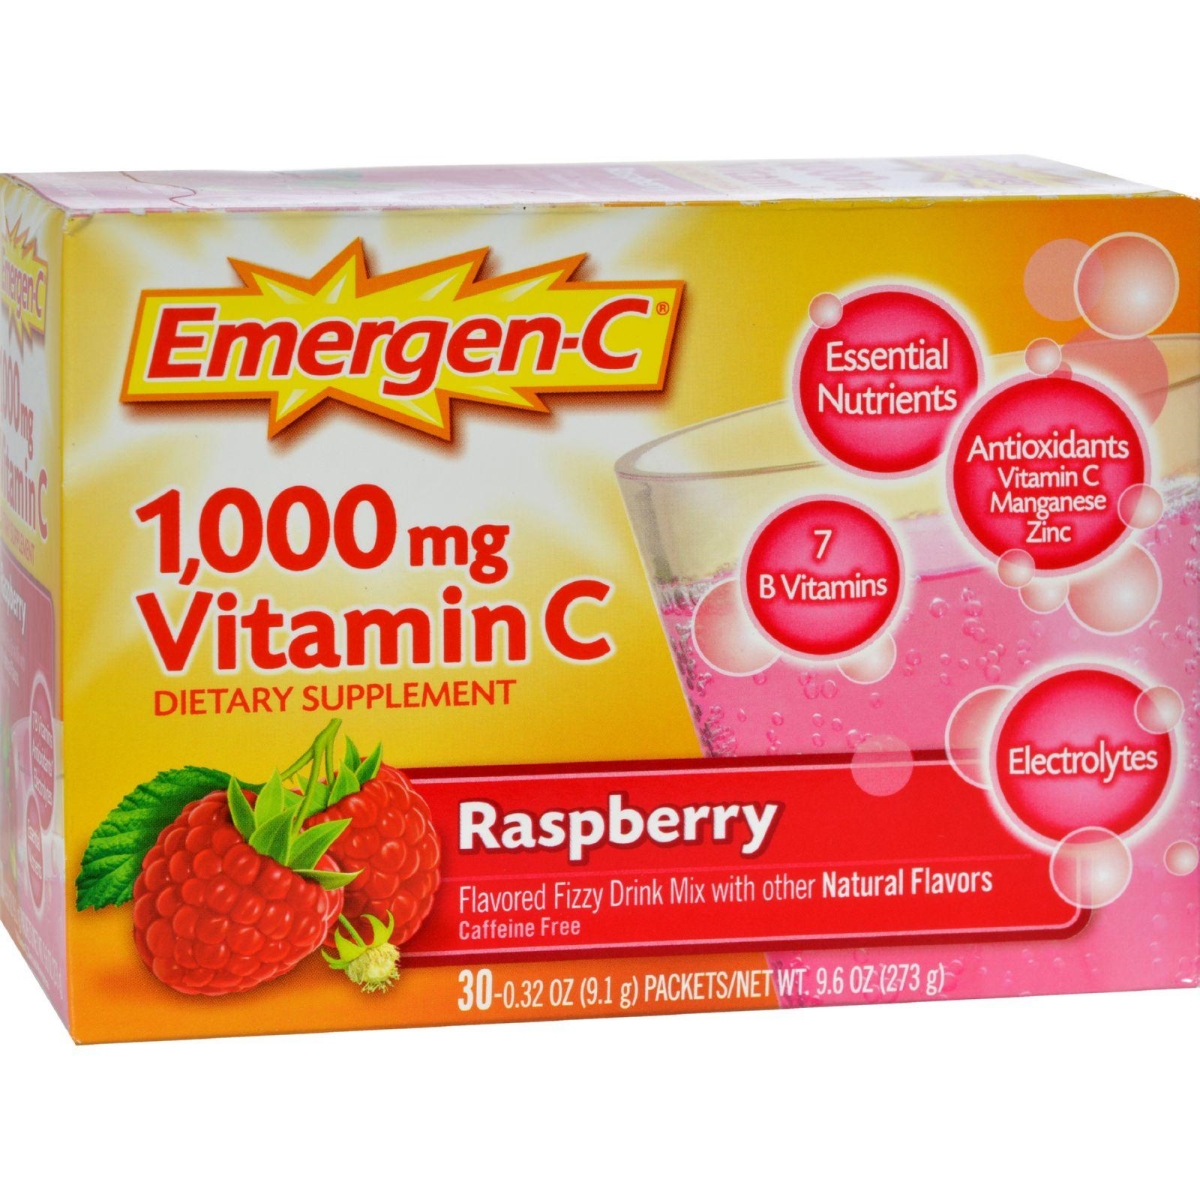 Alacer Hg0350975 1000 Mg Emergen-c Vitamin C Fizzy Drink Mix - Raspberry, 30 Packets